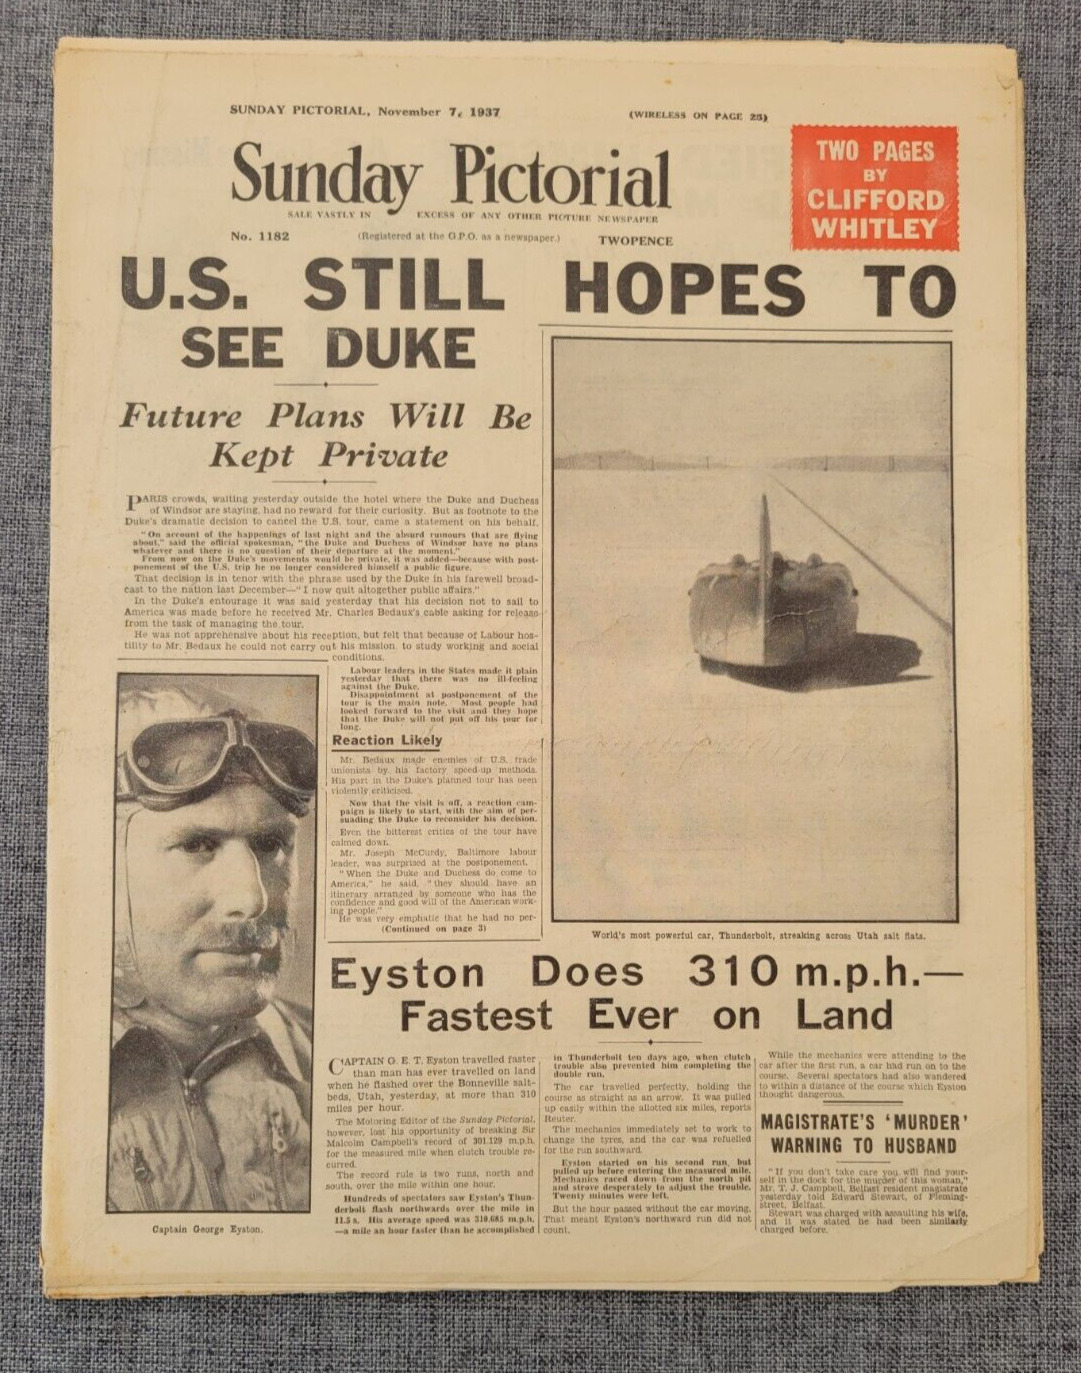 SUNDAY PICTORIAL 7 NOV 1937 GEORGE EYSTON GFASTEST EVER LAND 310 MPH NEWSPAPER